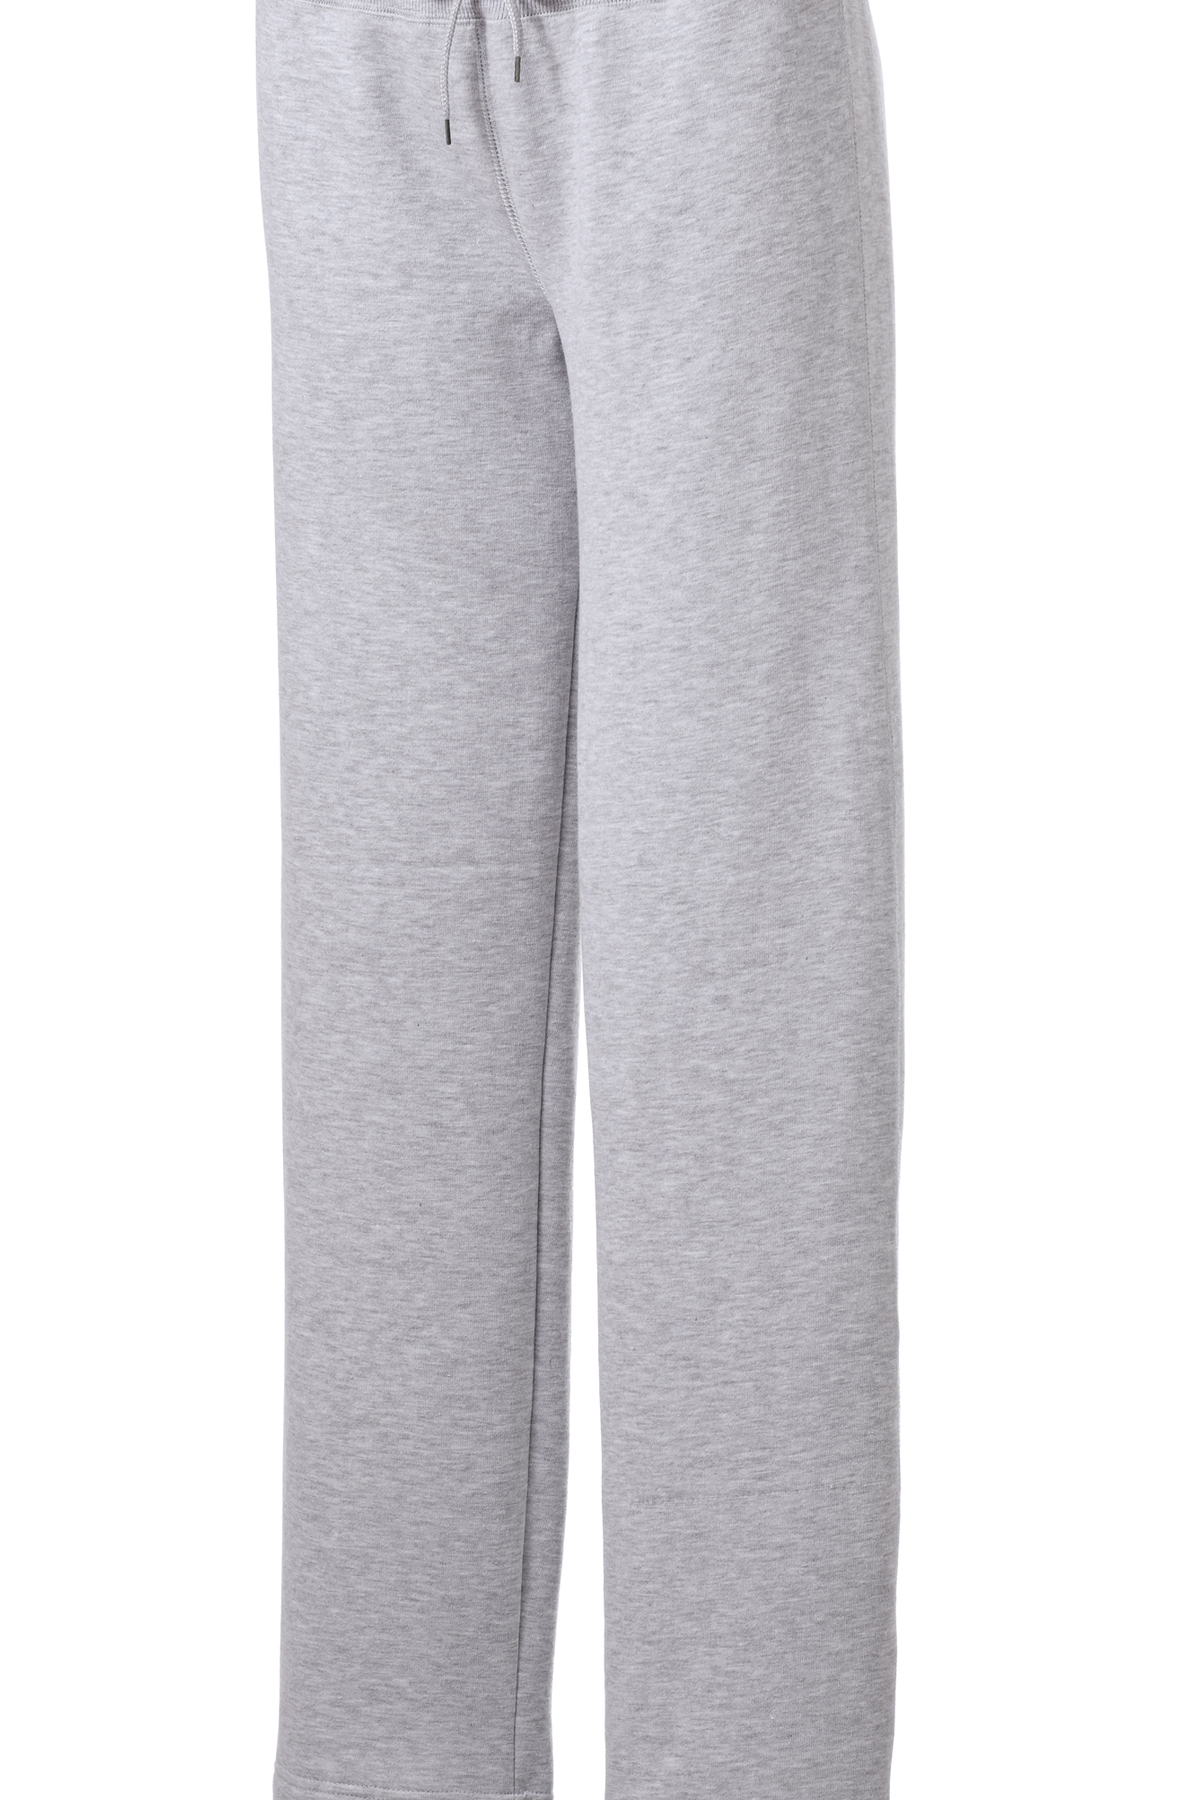 Sport-Tek Ladies Fleece Pant | Product | SanMar